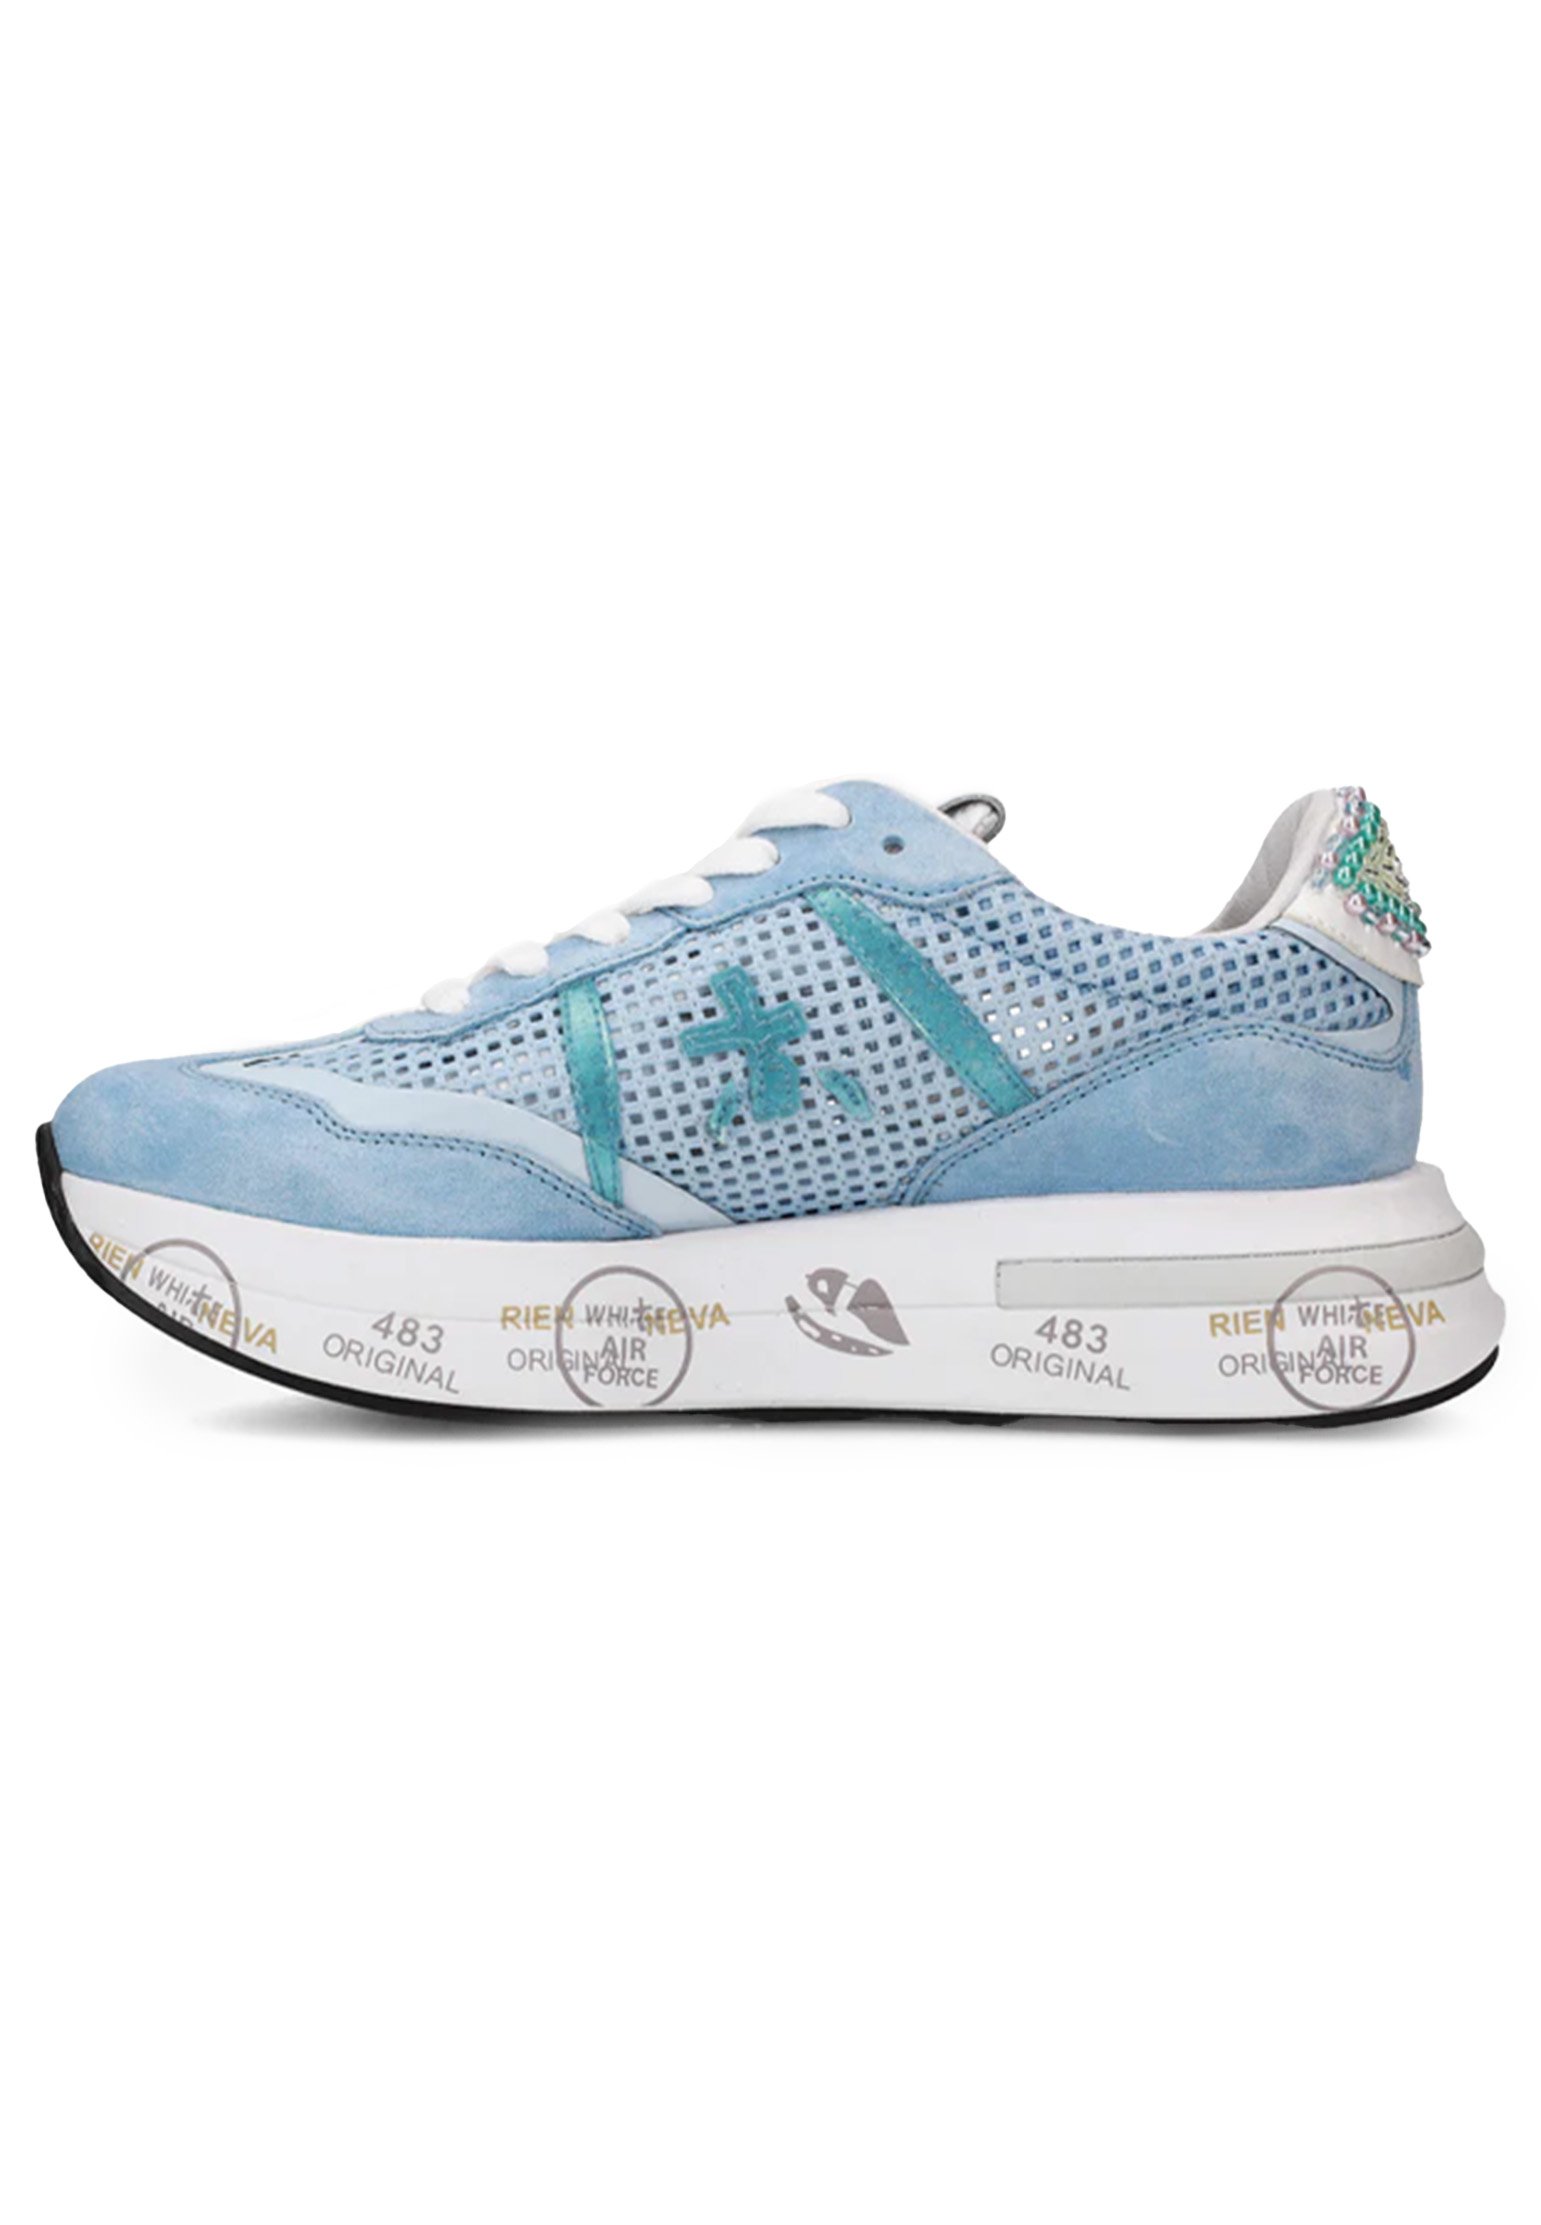 Sneakers PREMIATA Color: light blue (Code: 4544) in online store Allure